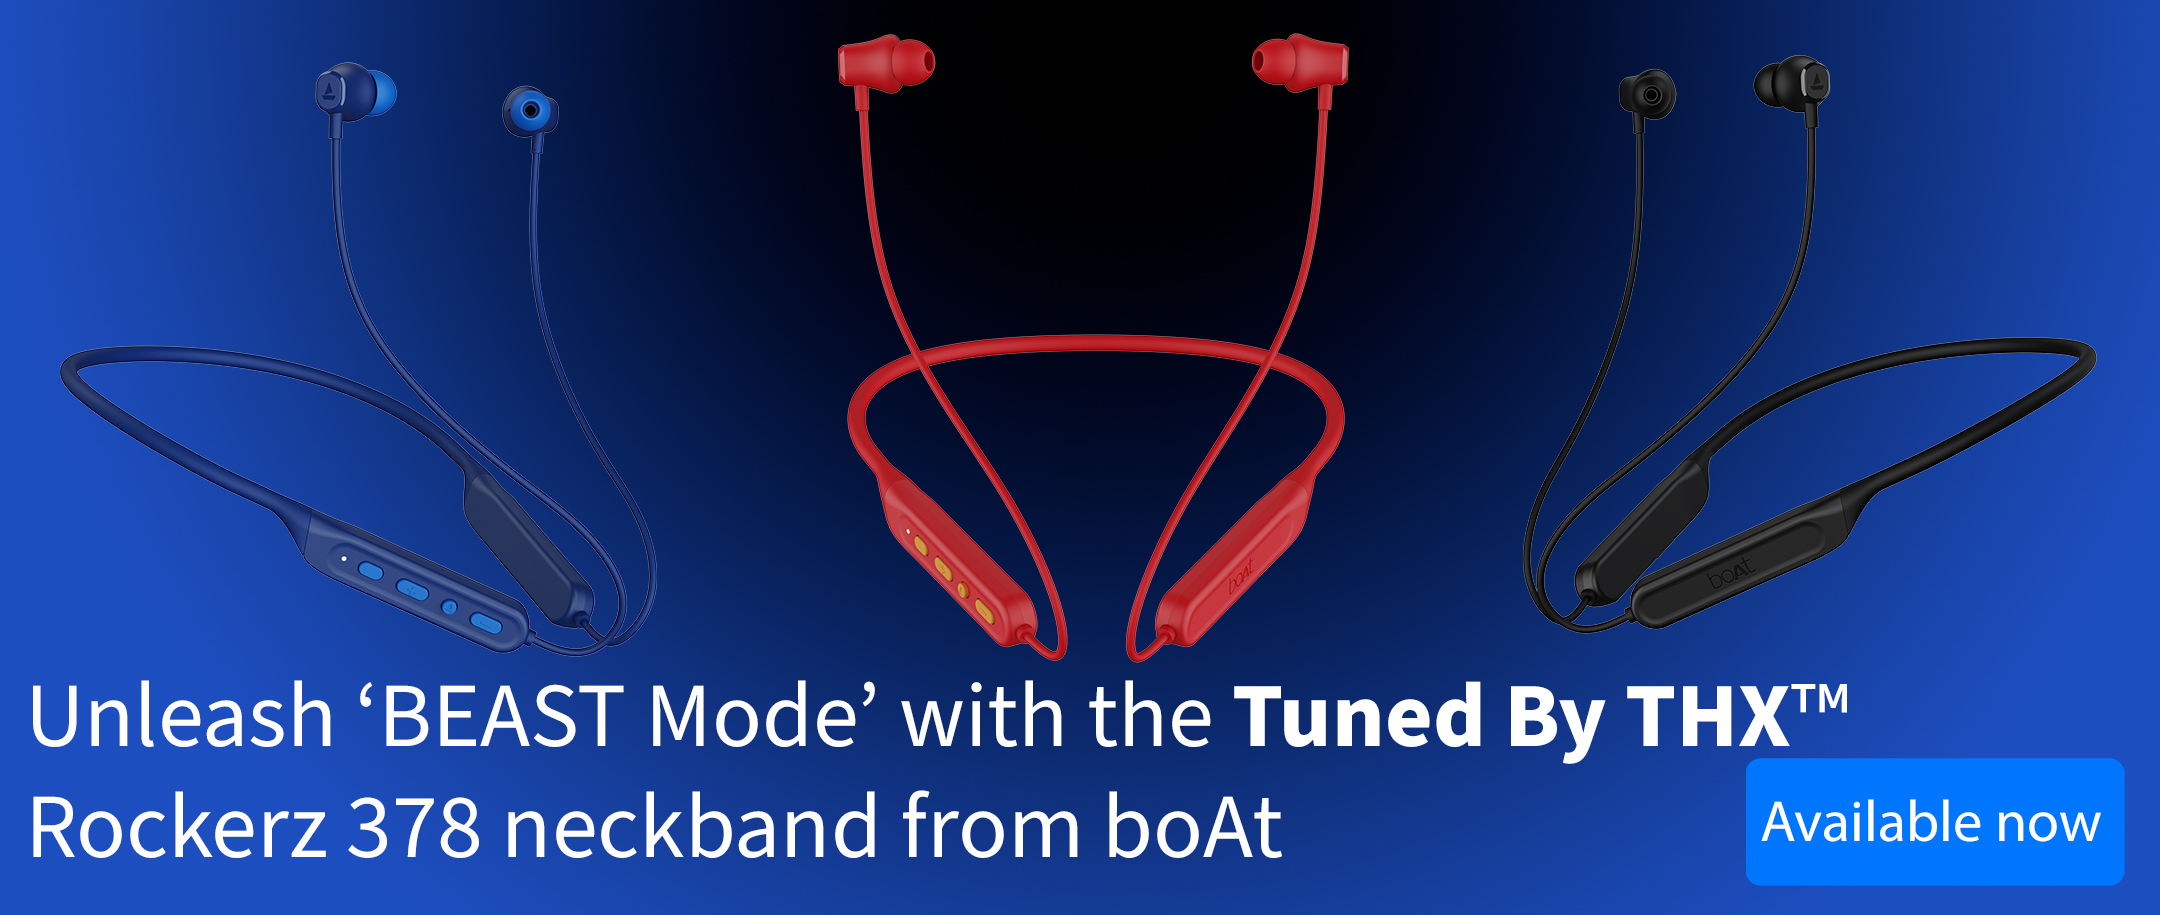 Boat Rockerz 378 headphones on a blue background